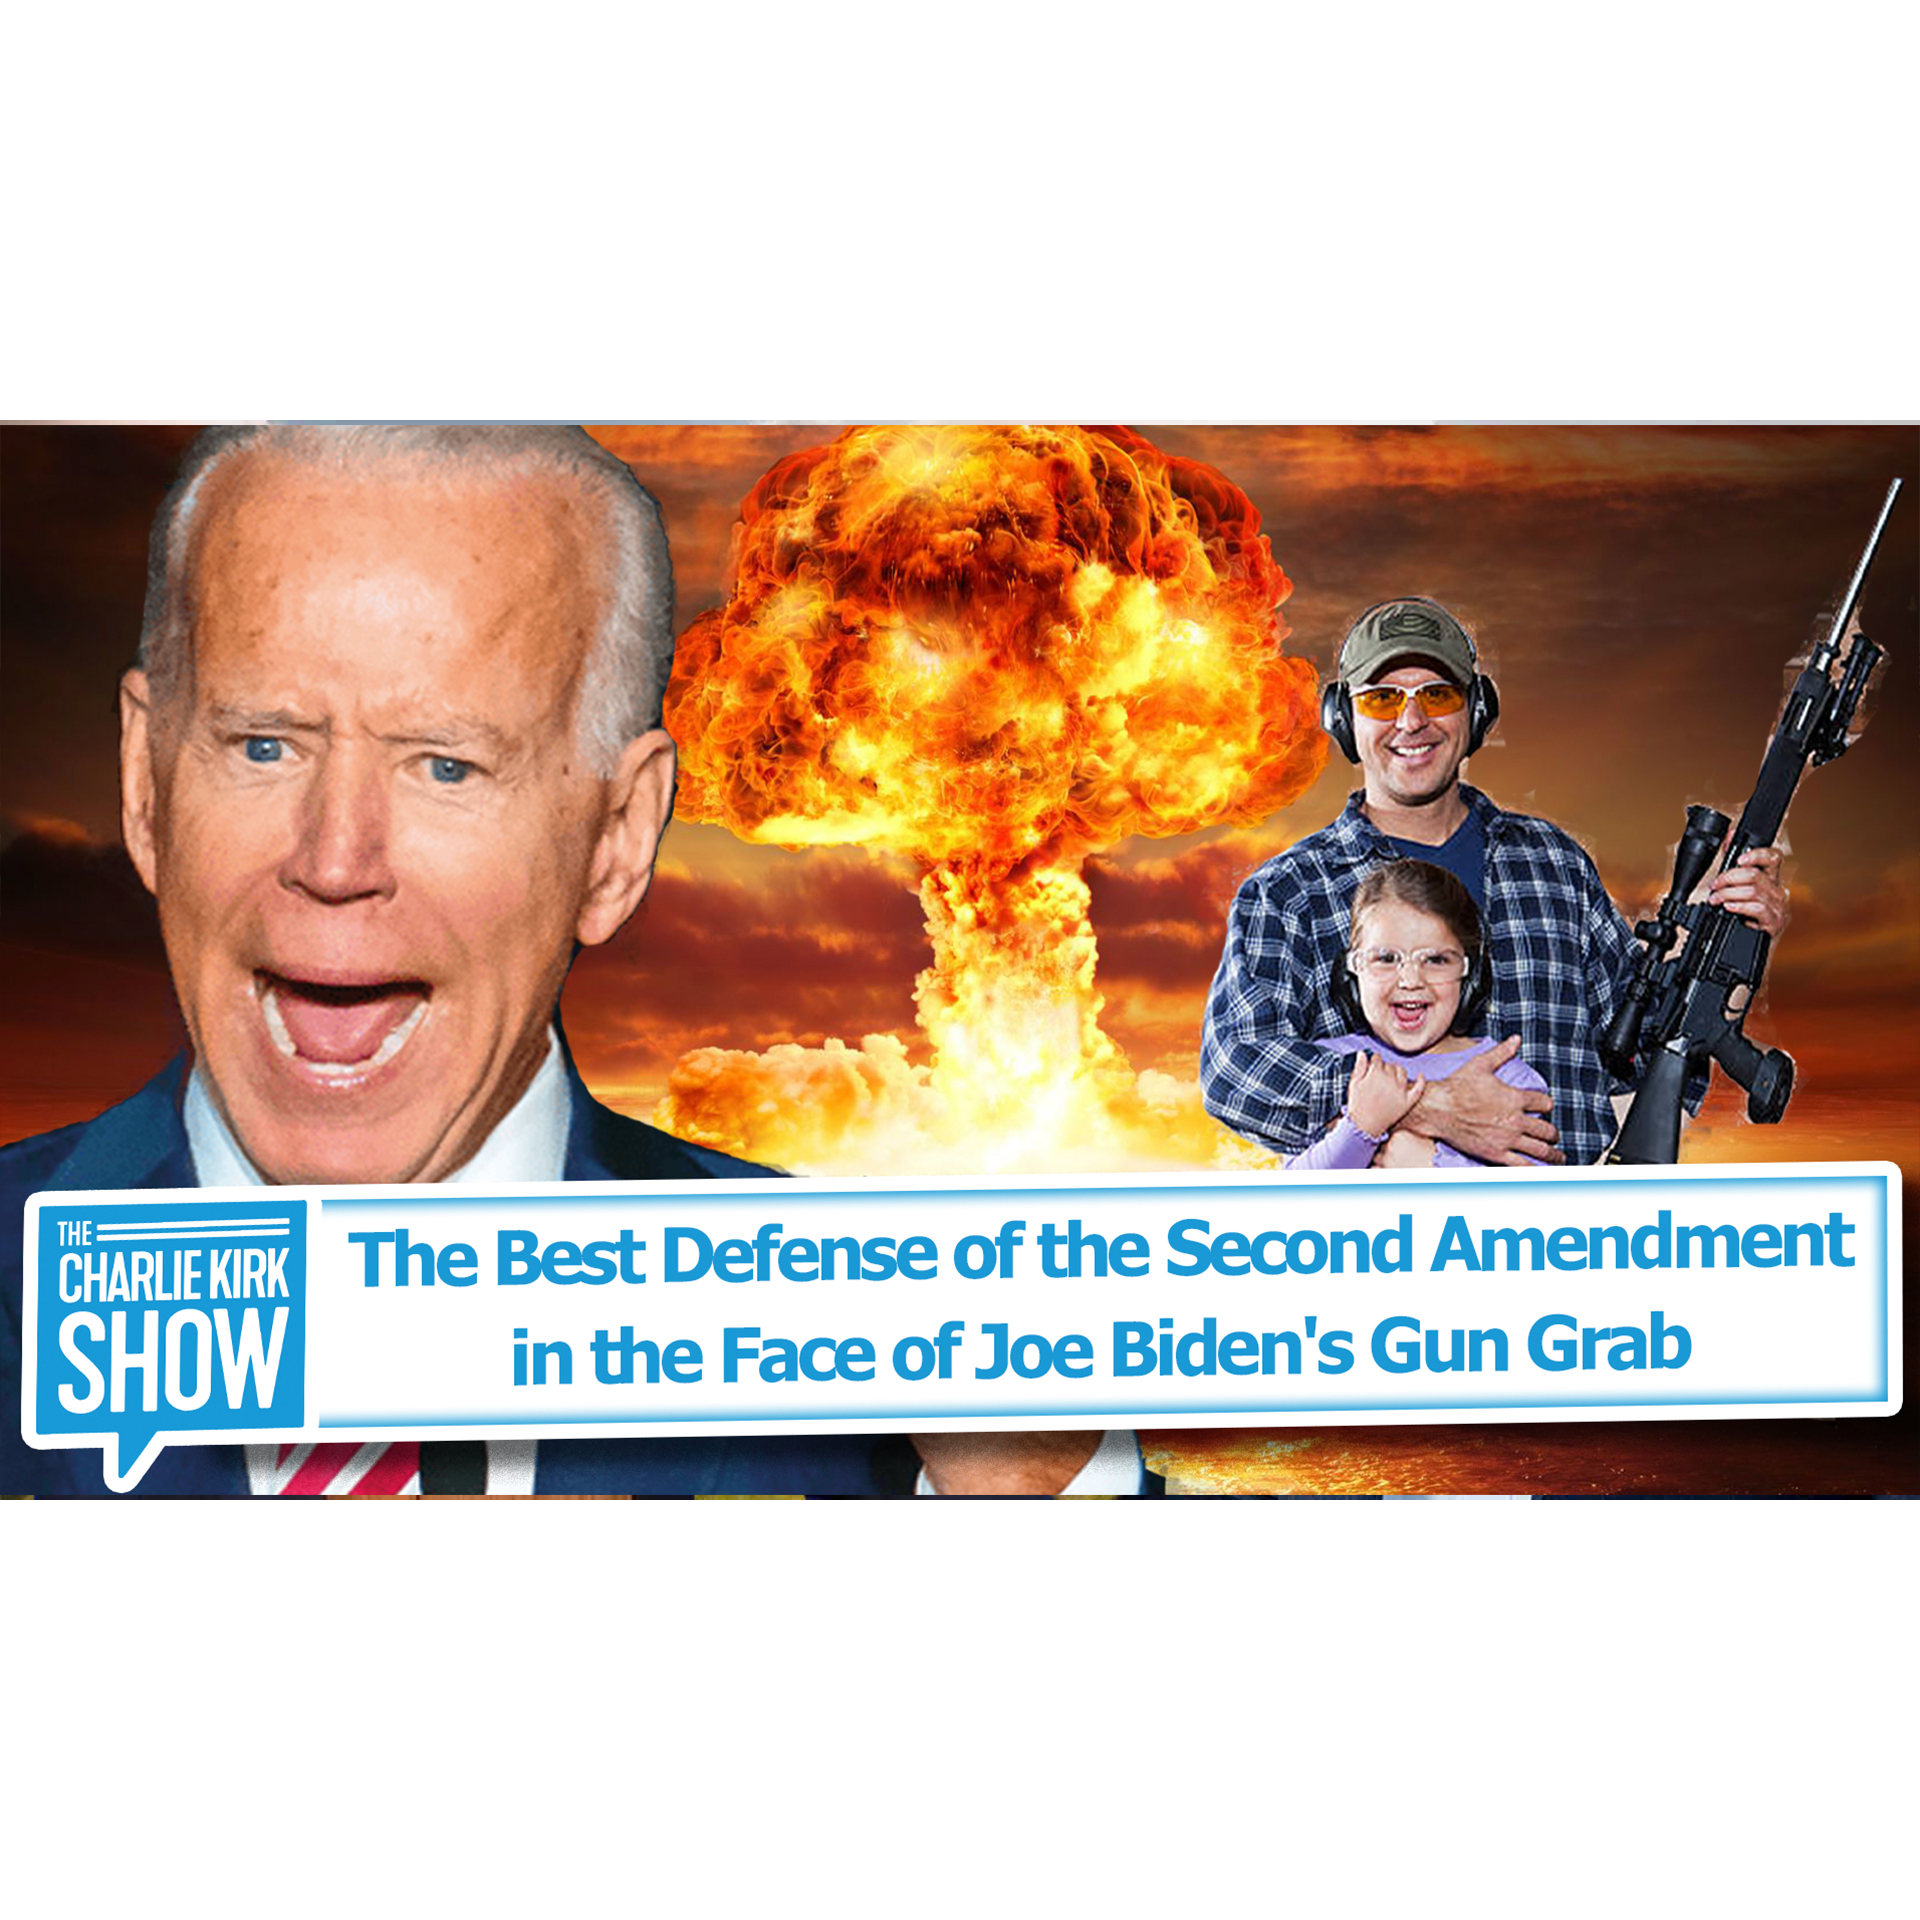 The Best Defense of the Second Amendment in the Face of Joe Biden's Gun Grab